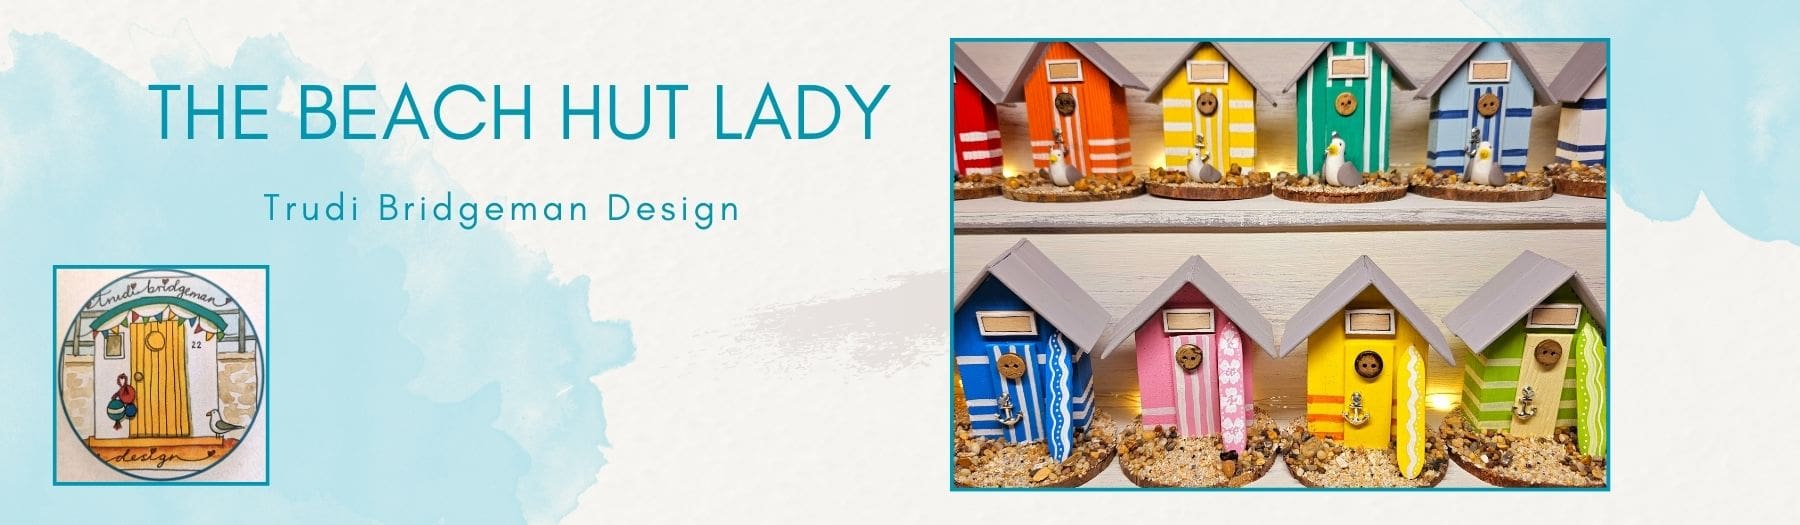 The Beach Hut Lady - Trudi Bridgeman Designs